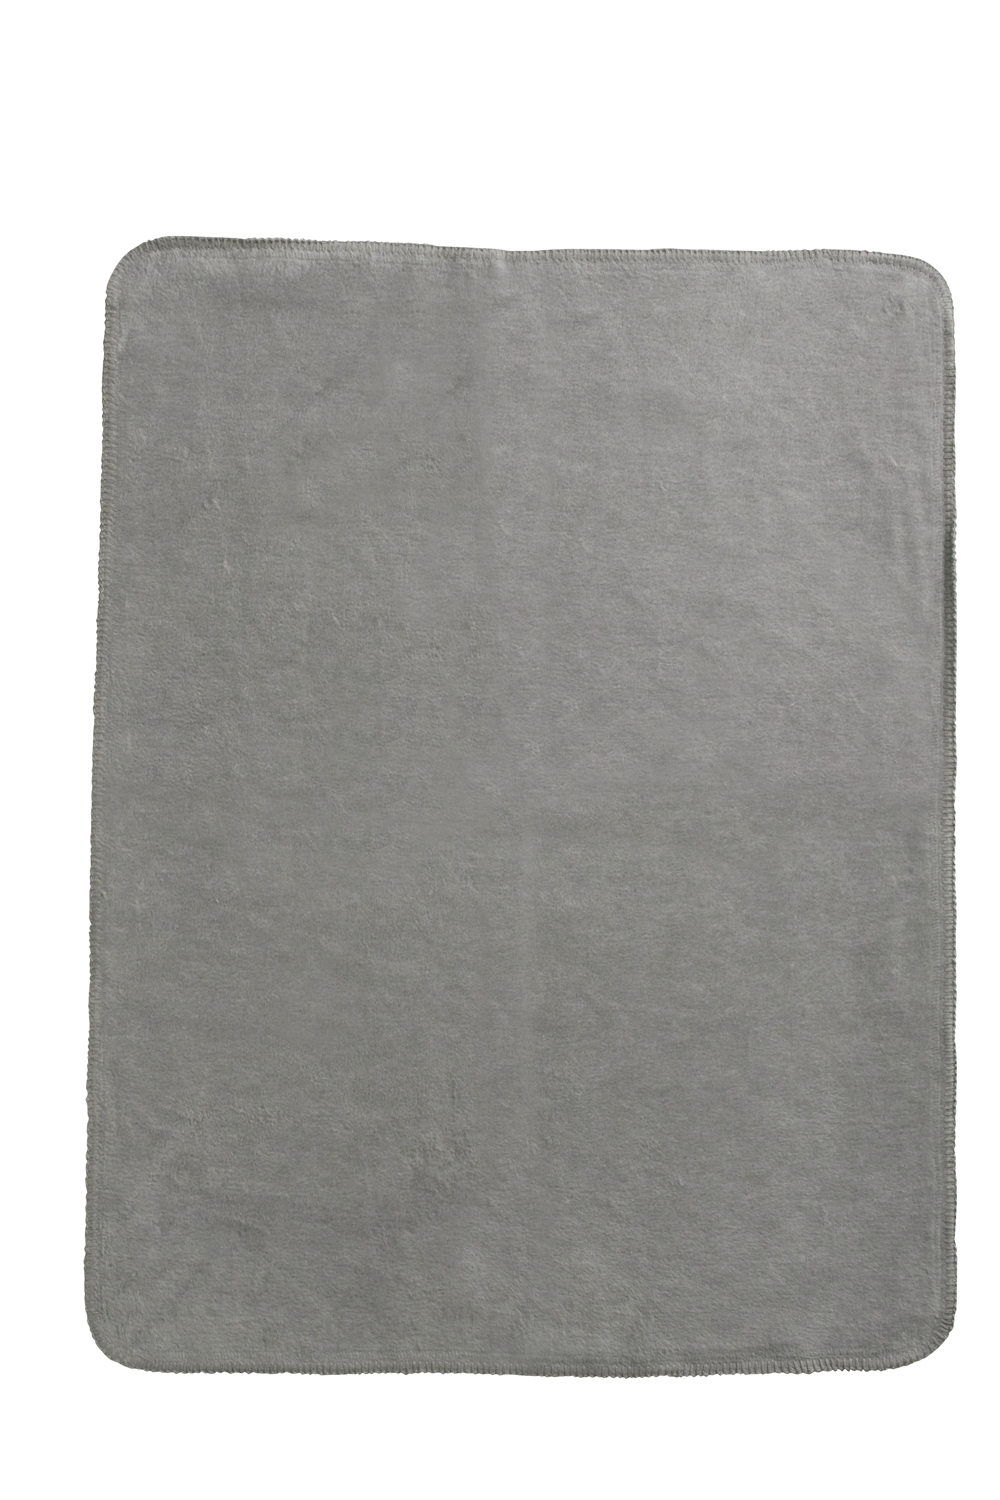 Wiegdeken Double Face - grey/white - 75x100cm